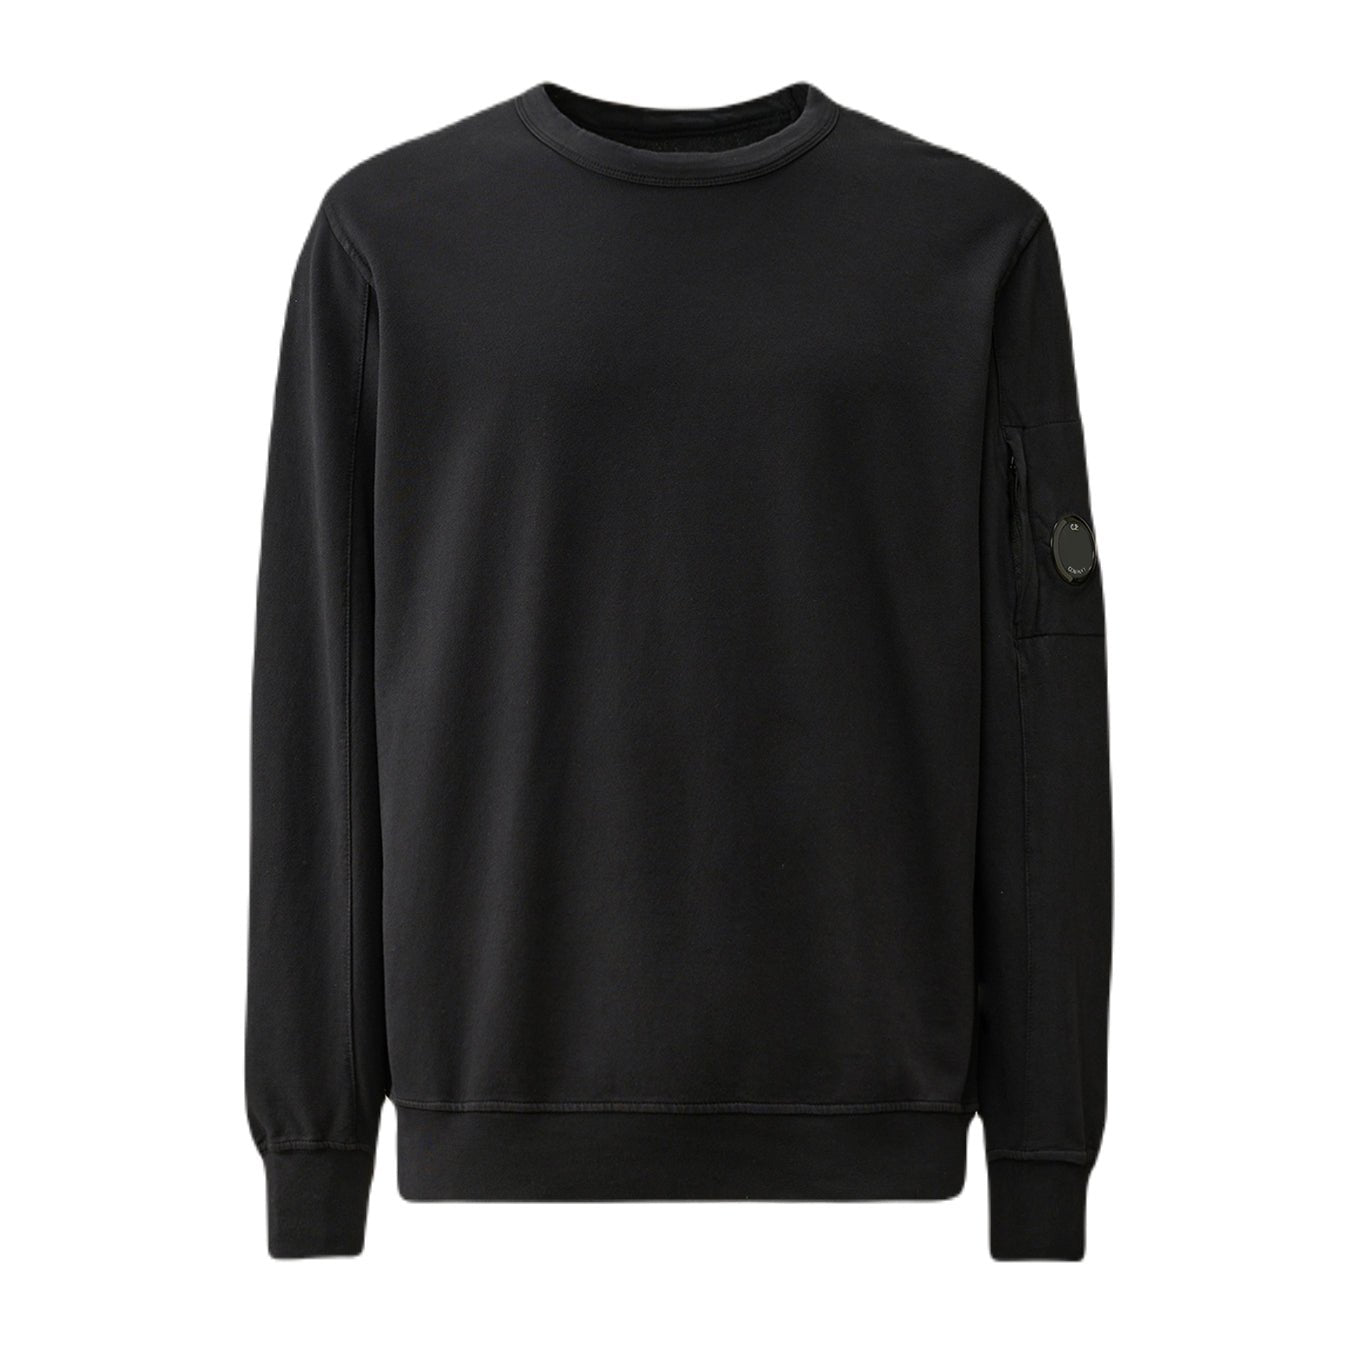 C.P. Company MSS032A Light Fleece Sweatshirt - 999 Black - Escape Menswear